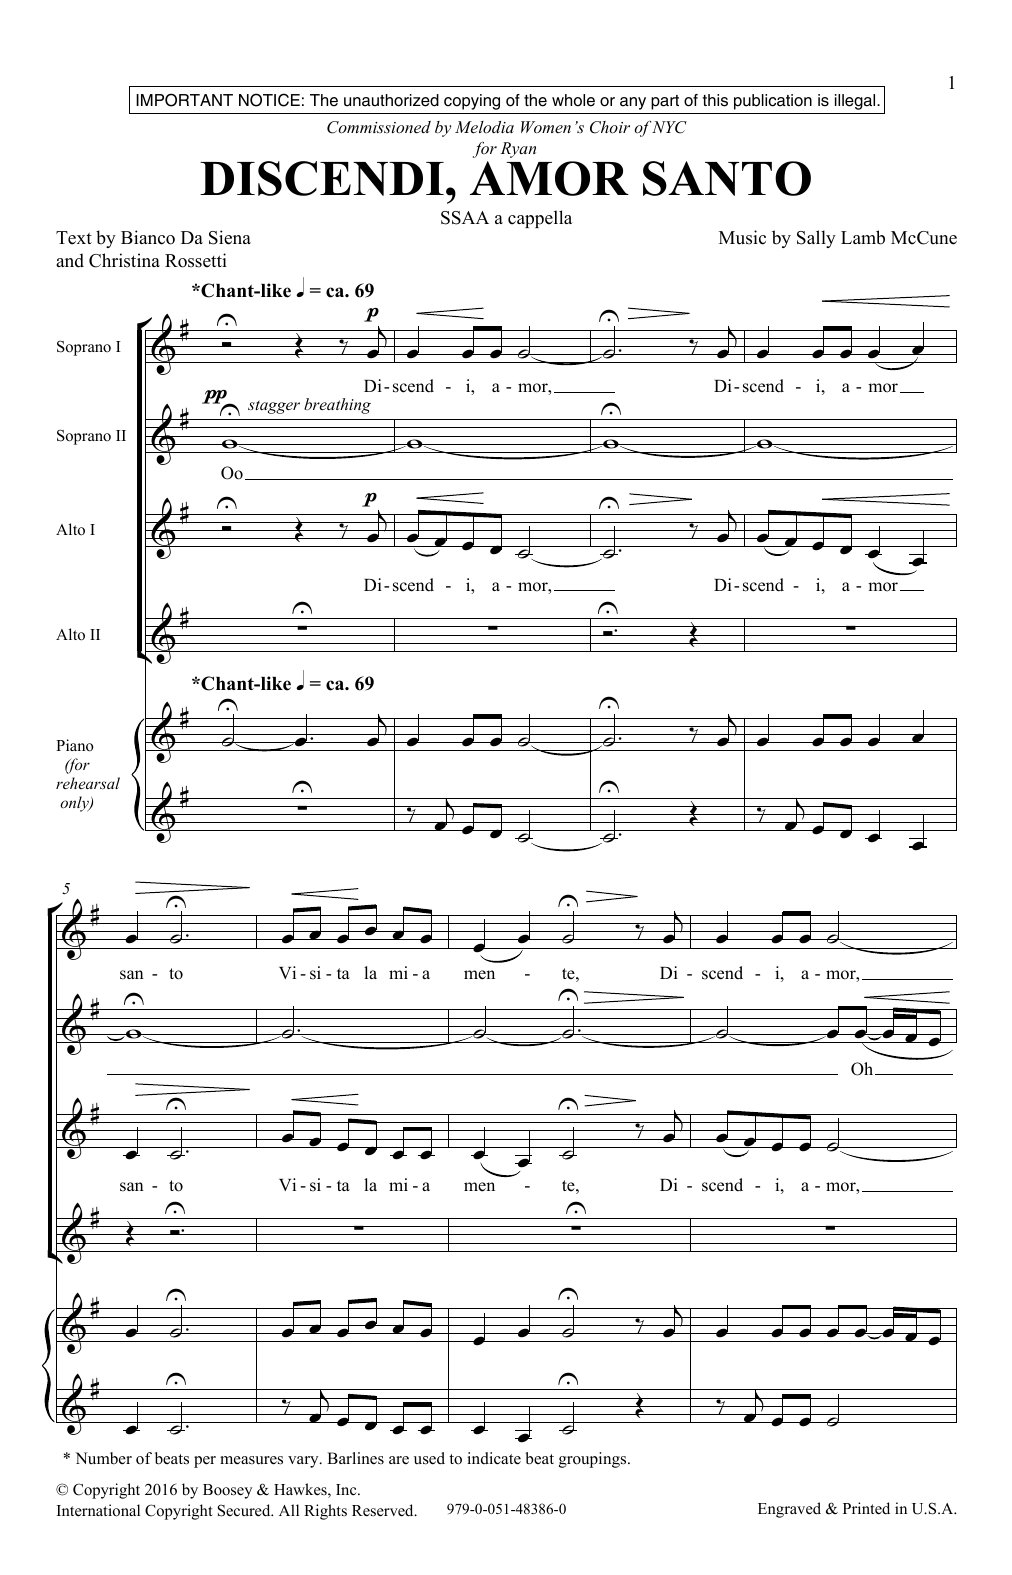 Sally Lamb McCune Discendi, Amor Santo Sheet Music Notes & Chords for SSA - Download or Print PDF